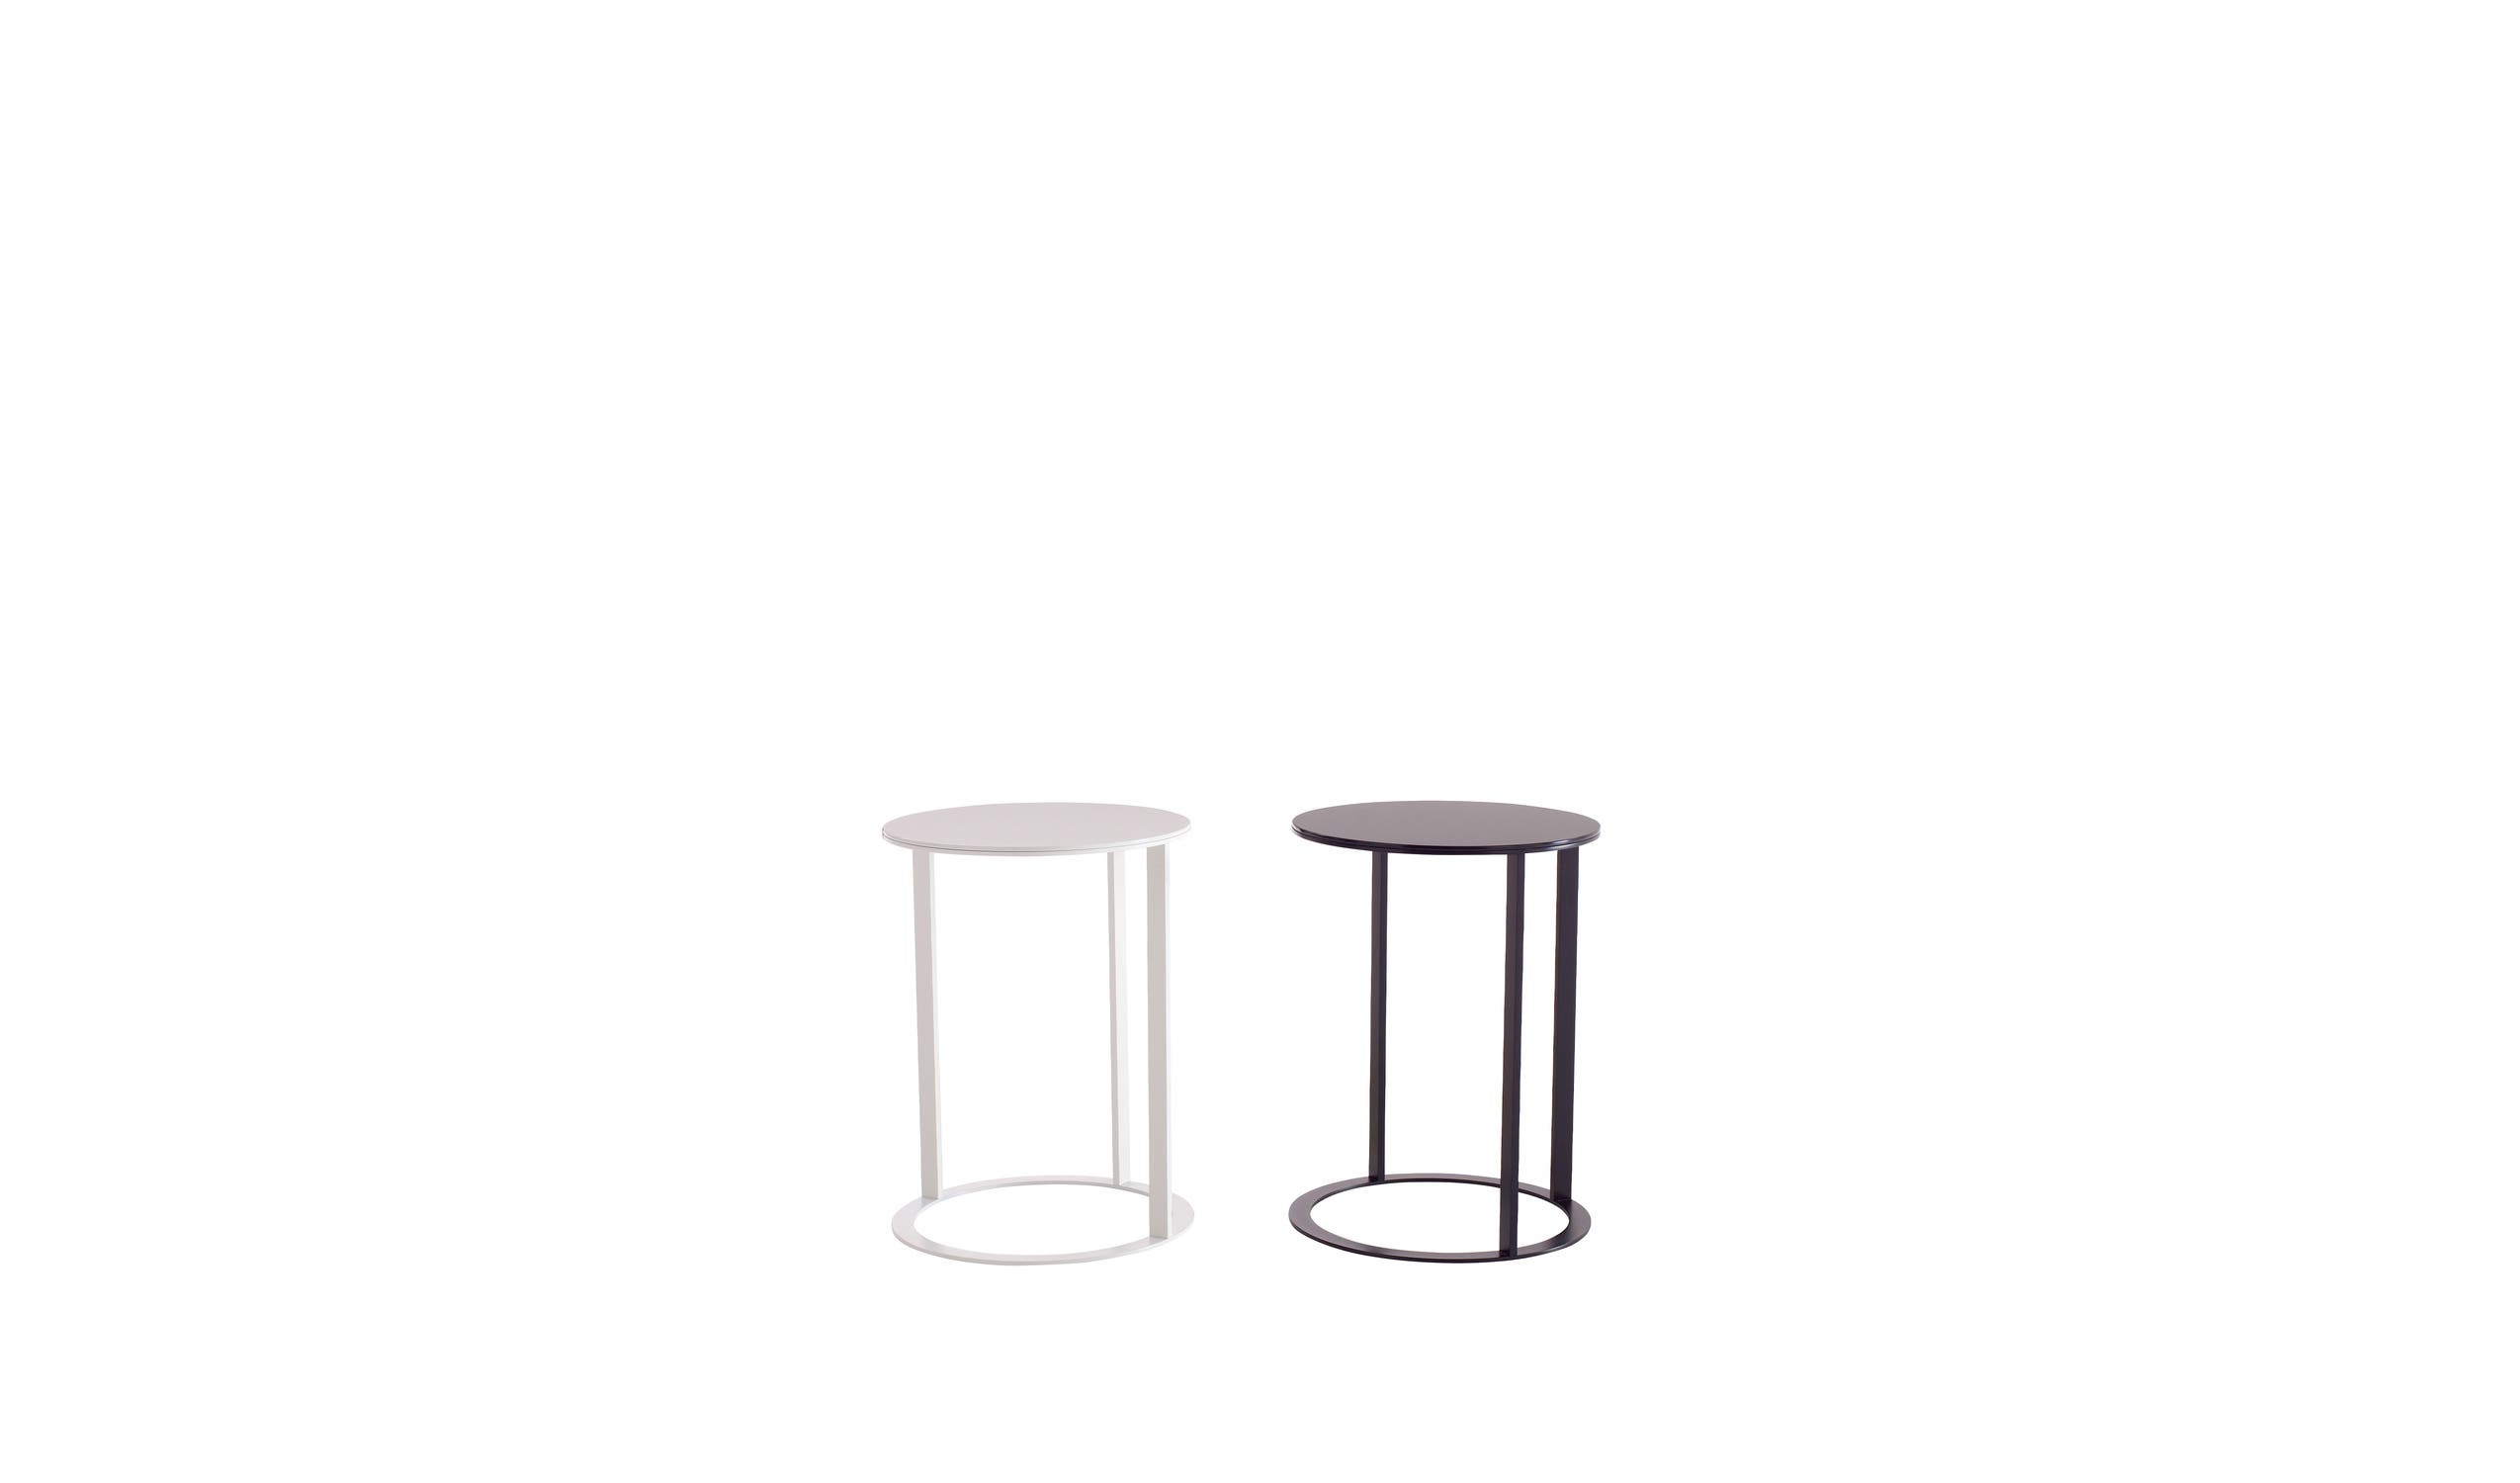 Designer italian modern small tables  - Frank Small tables 1